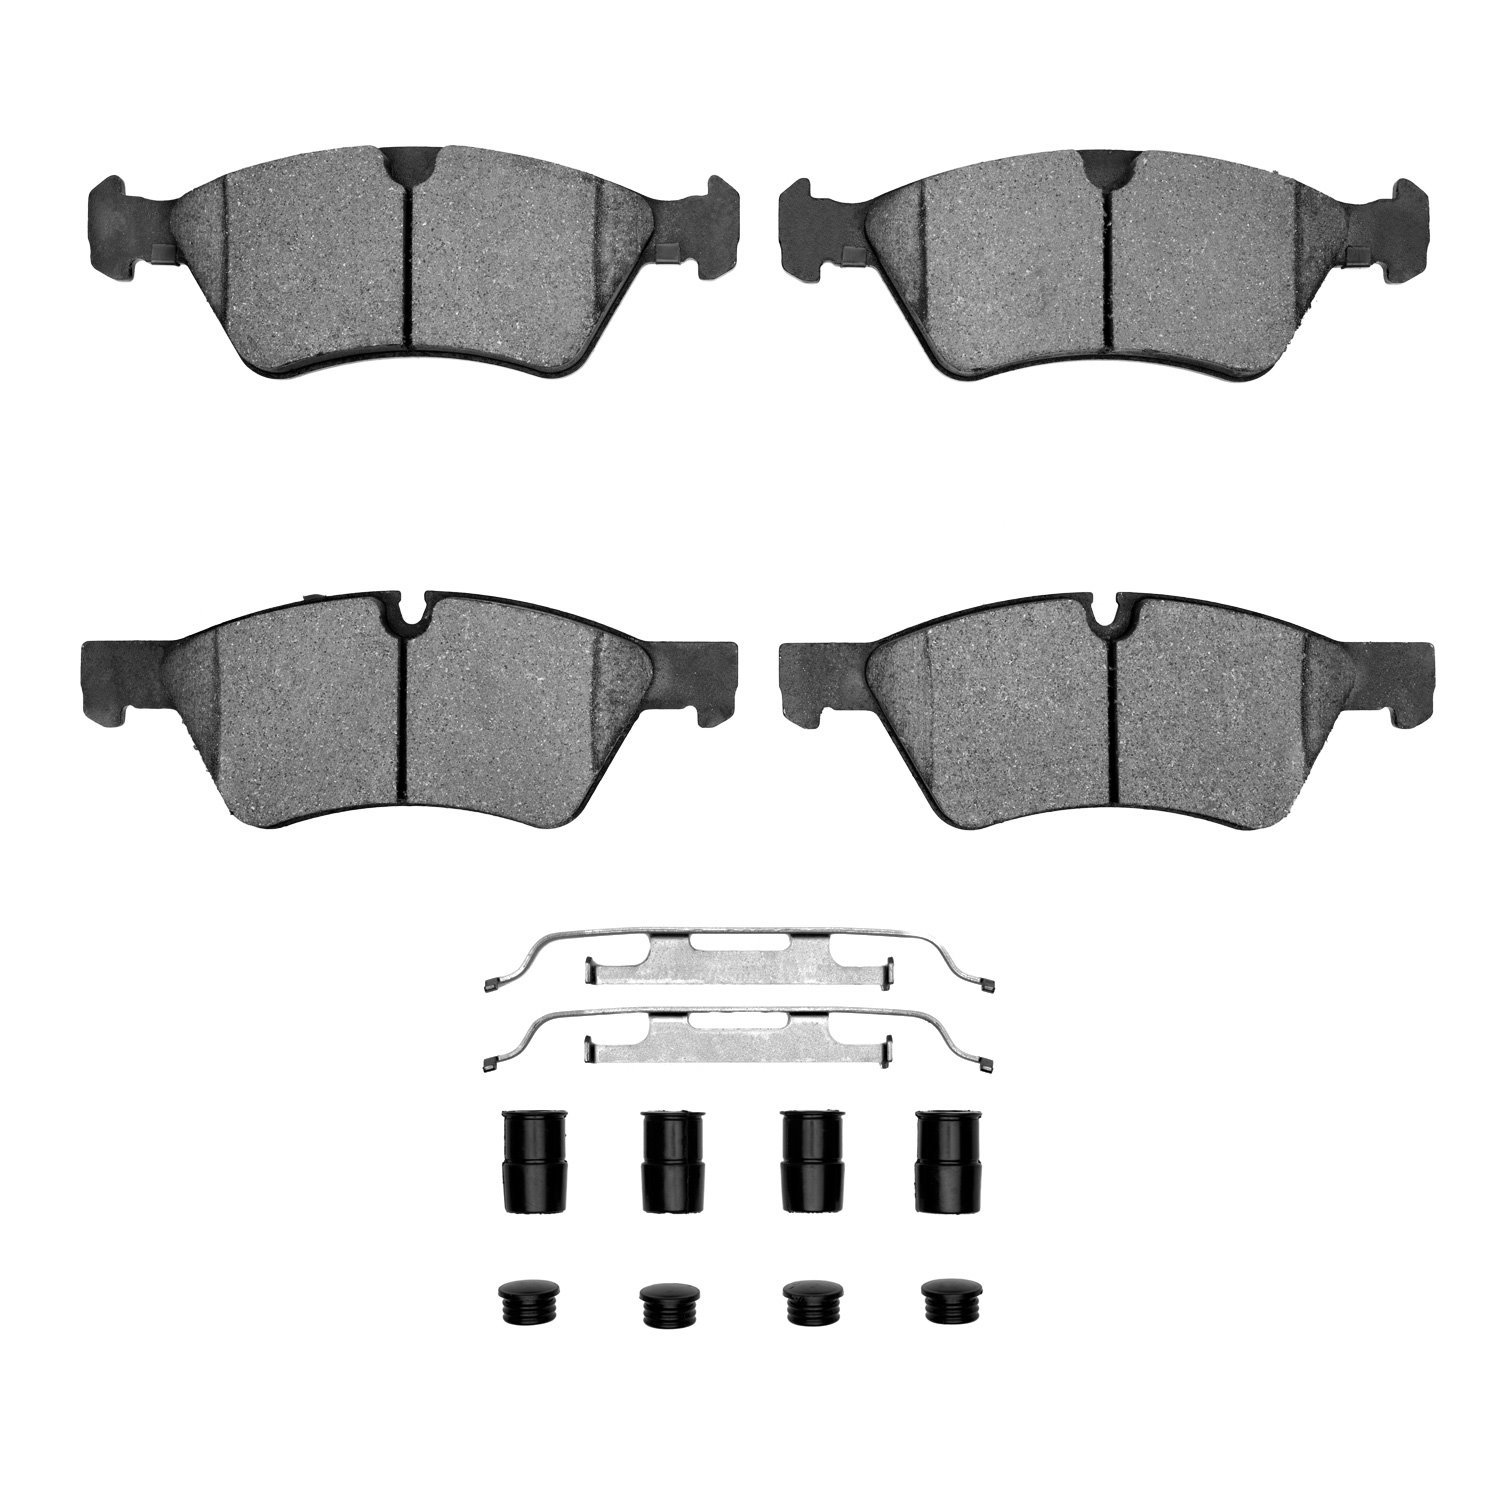 1551-1123-01 5000 Advanced Low-Metallic Brake Pads & Hardware Kit, 2005-2012 Mercedes-Benz, Position: Front